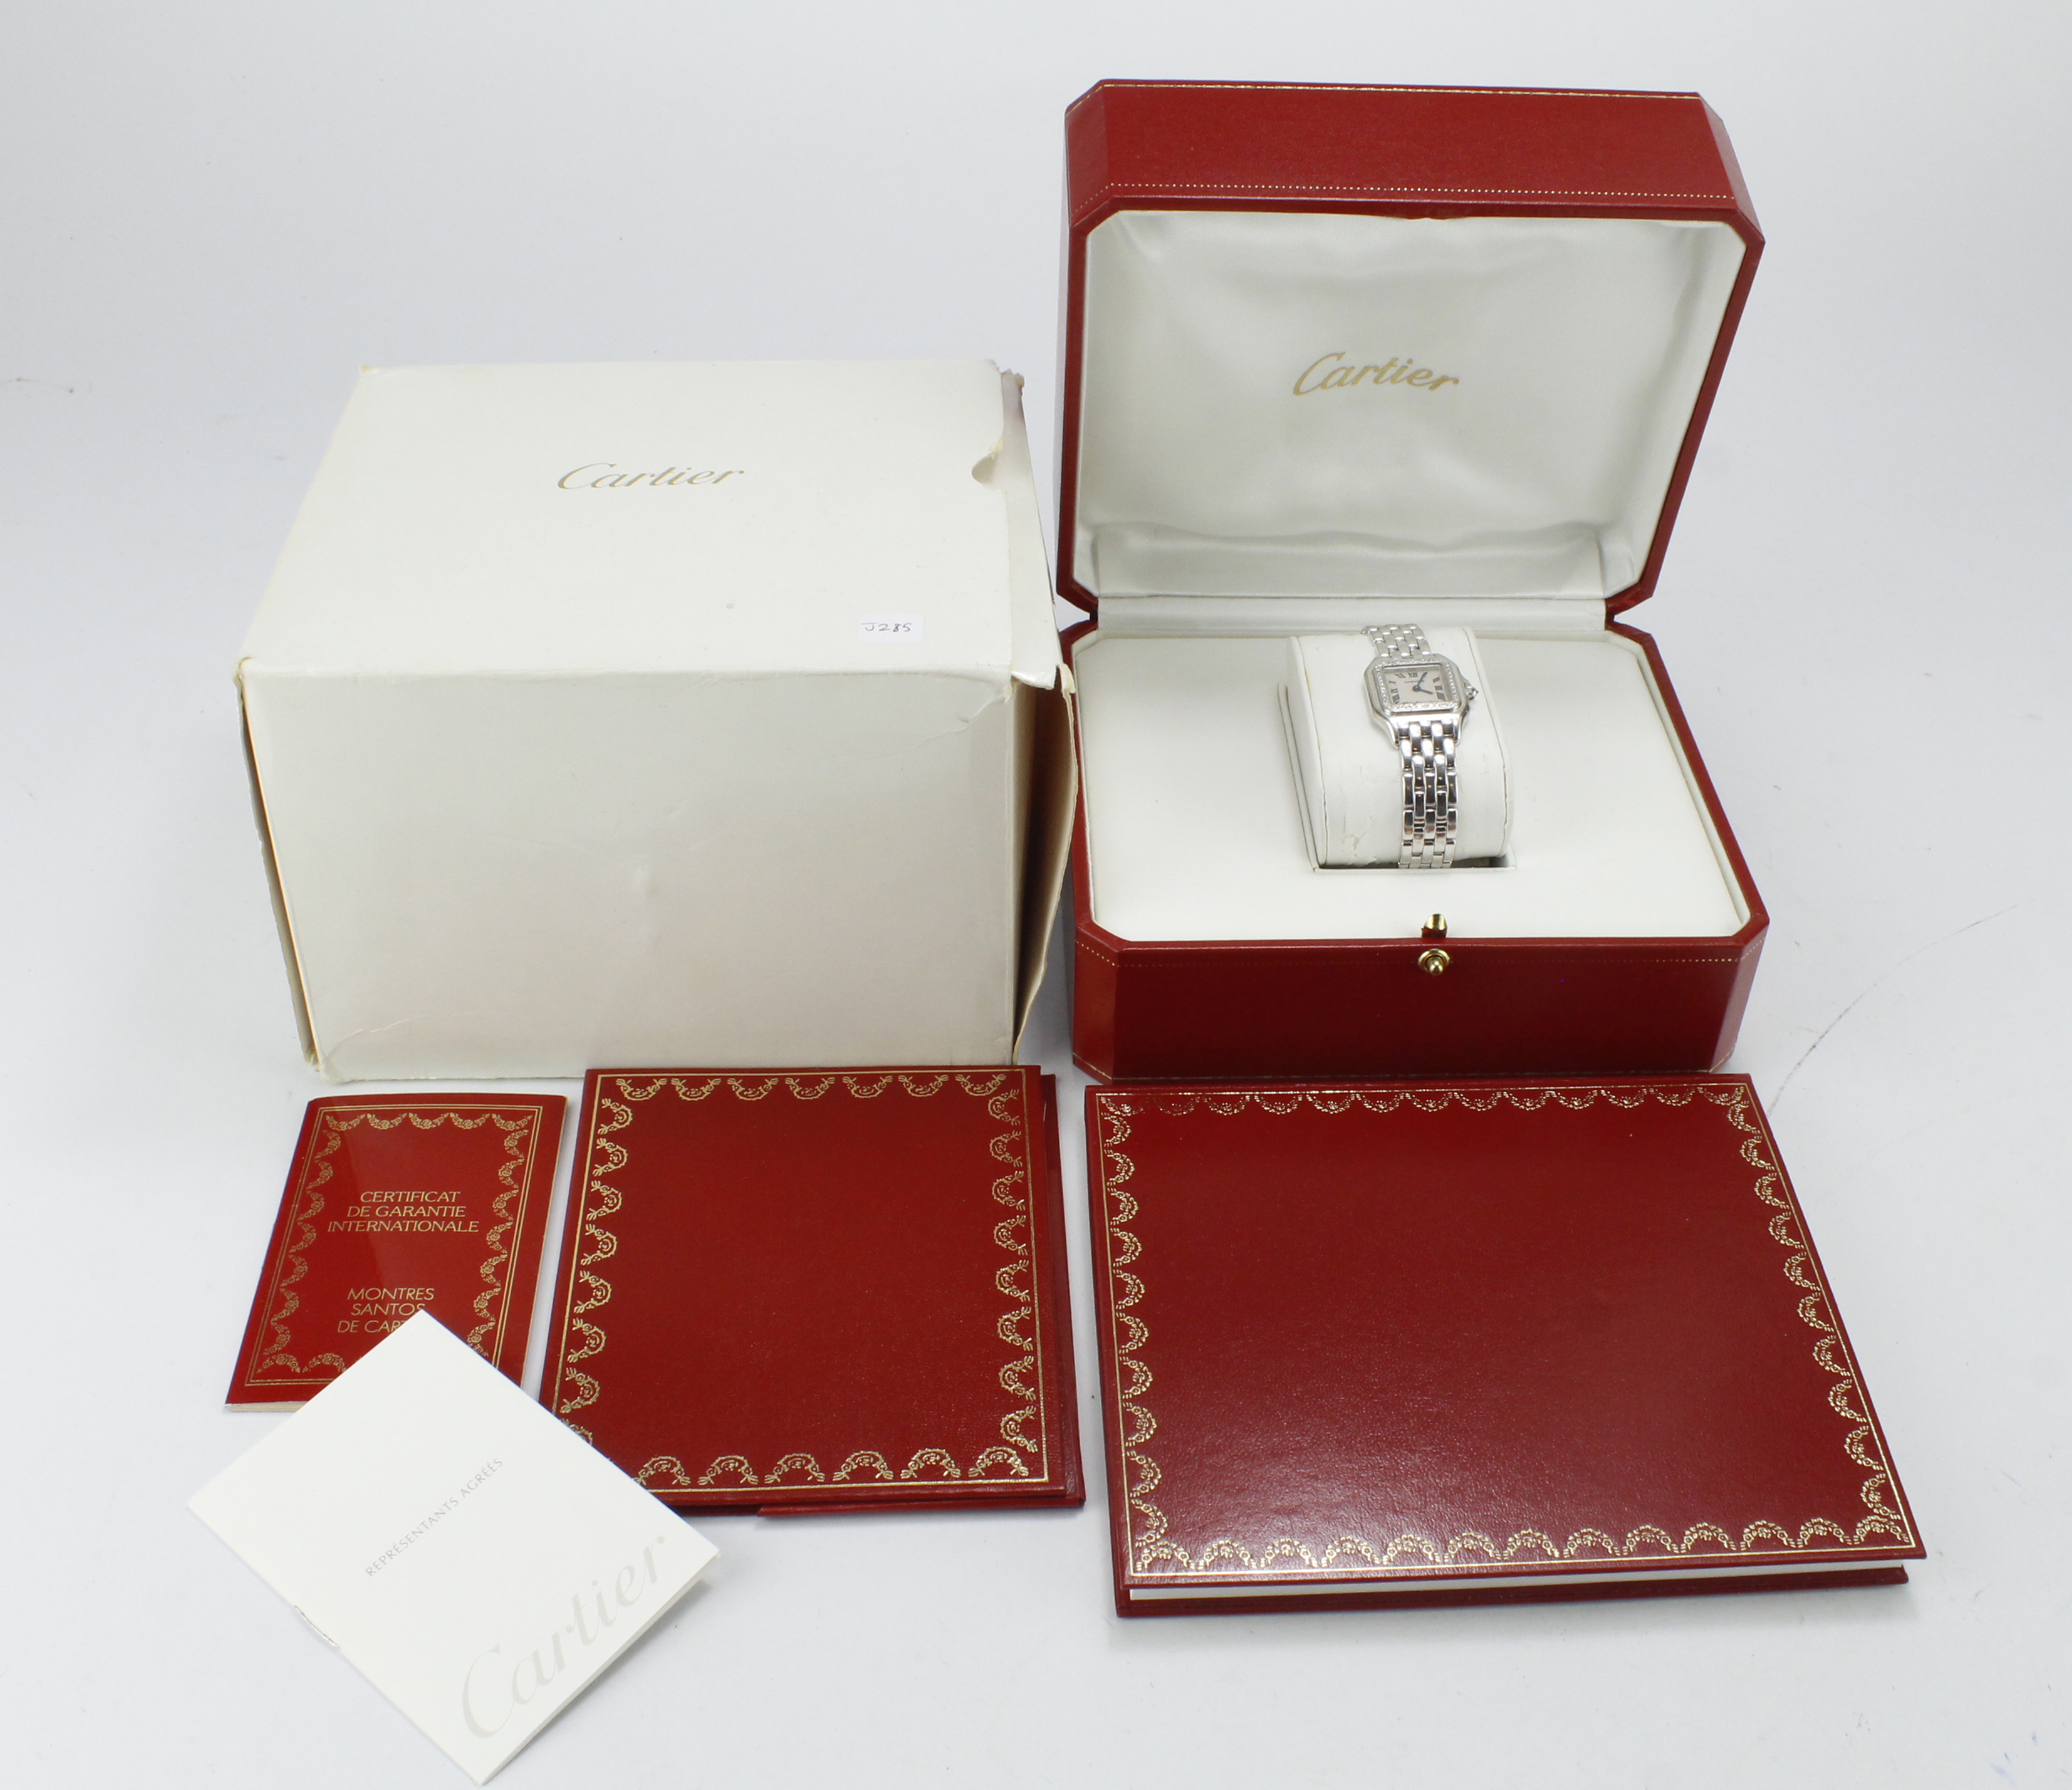 Cartier Panthere 18ct white gold factory diamond set quartz ladies wristwatch, ref. 1660, serial - Image 2 of 2